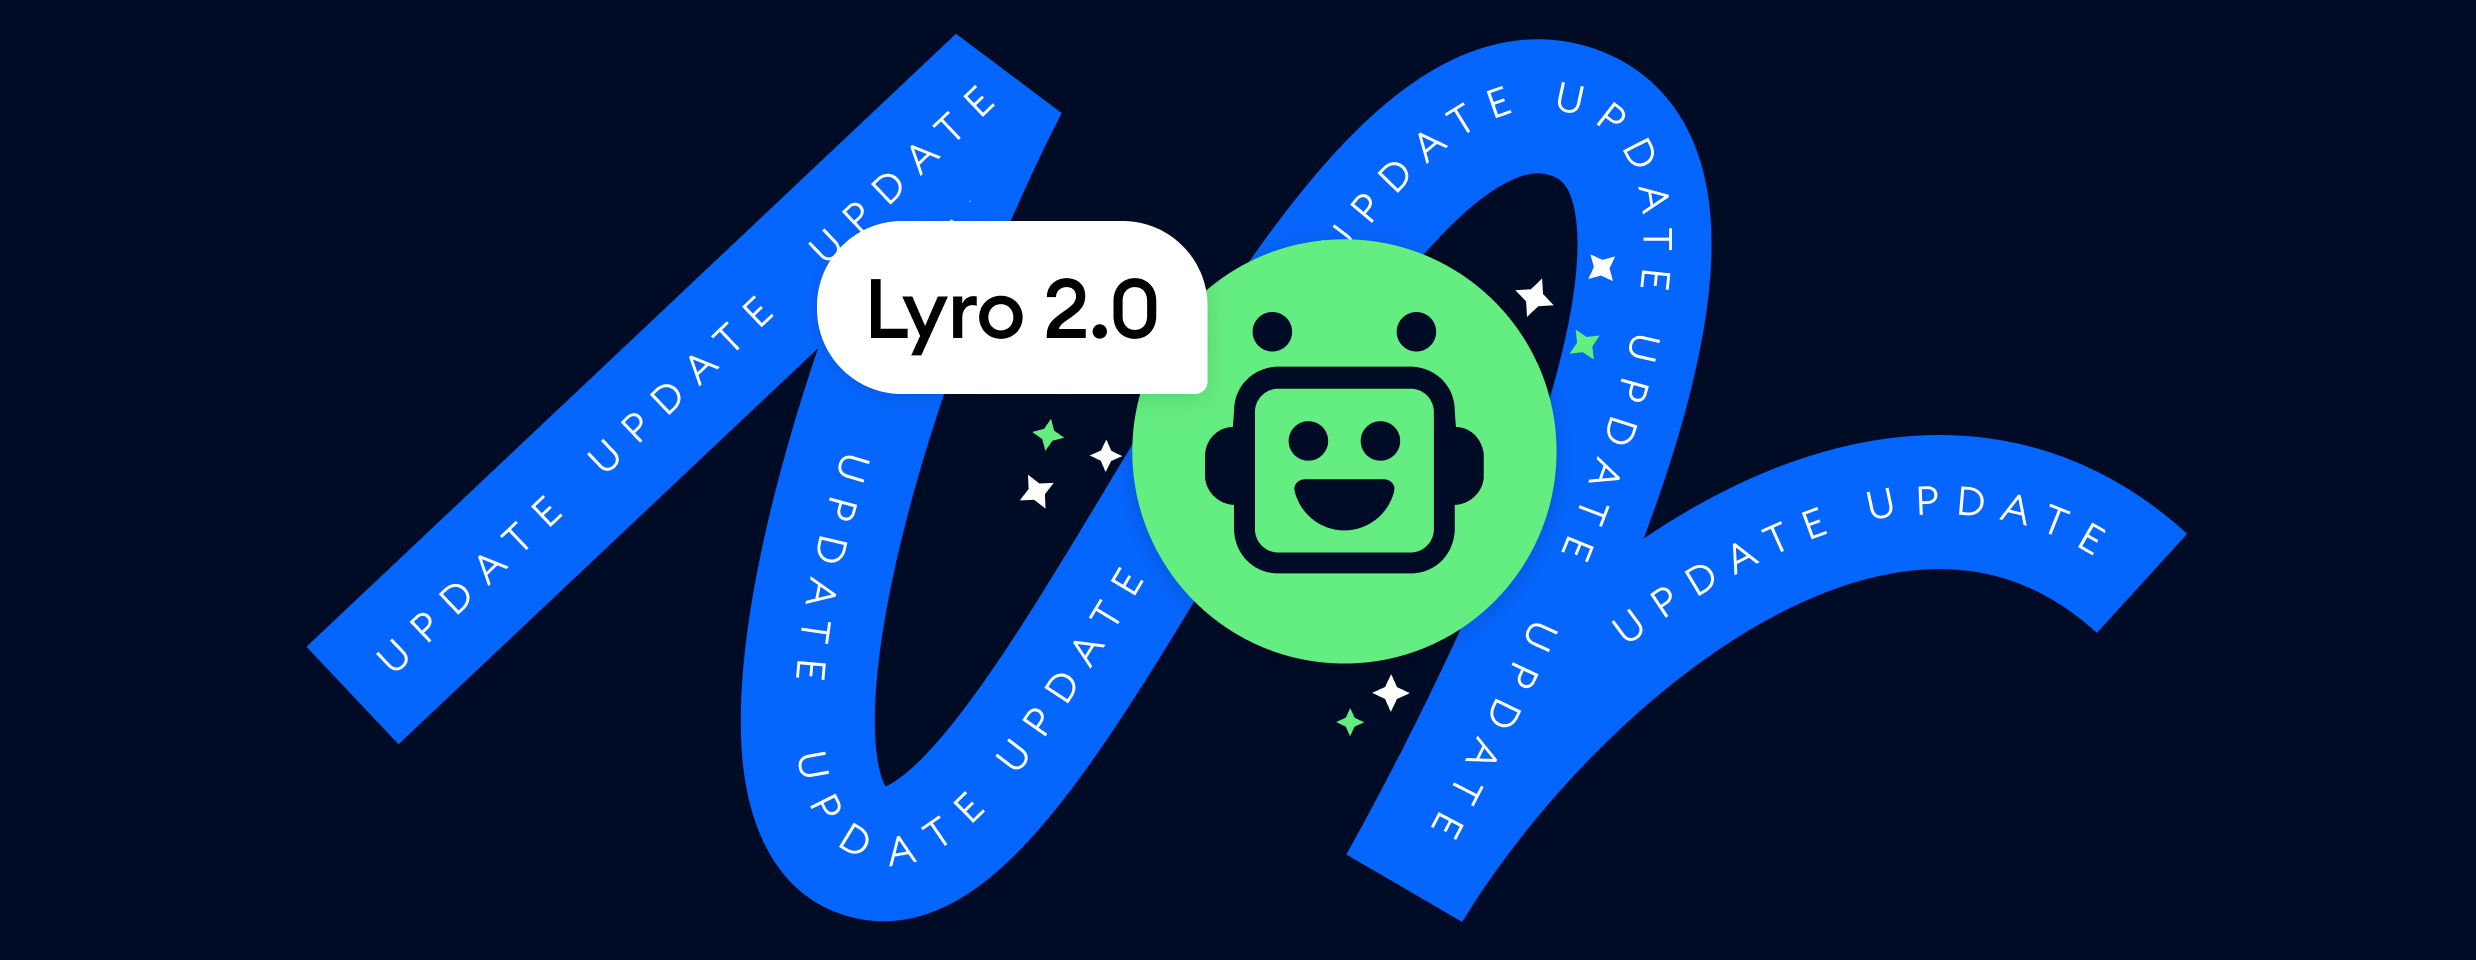 lyro 2.0 cover image